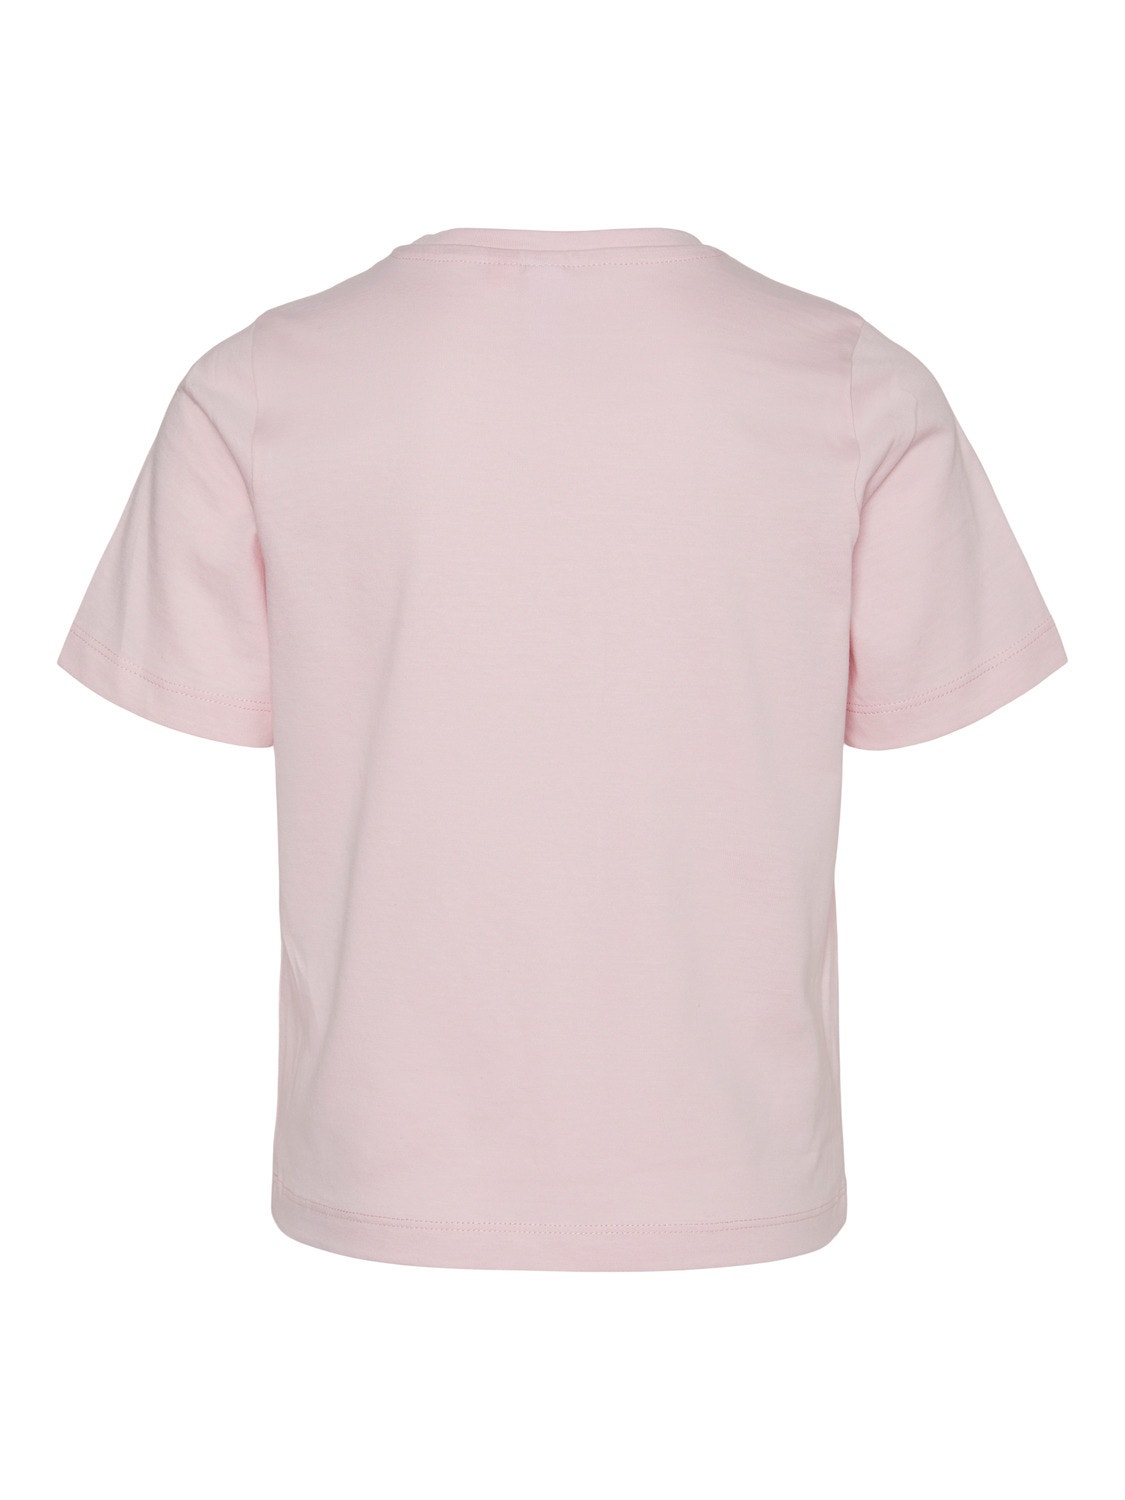 Vero Moda VMPOPSY Top -Parfait Pink - 10306159